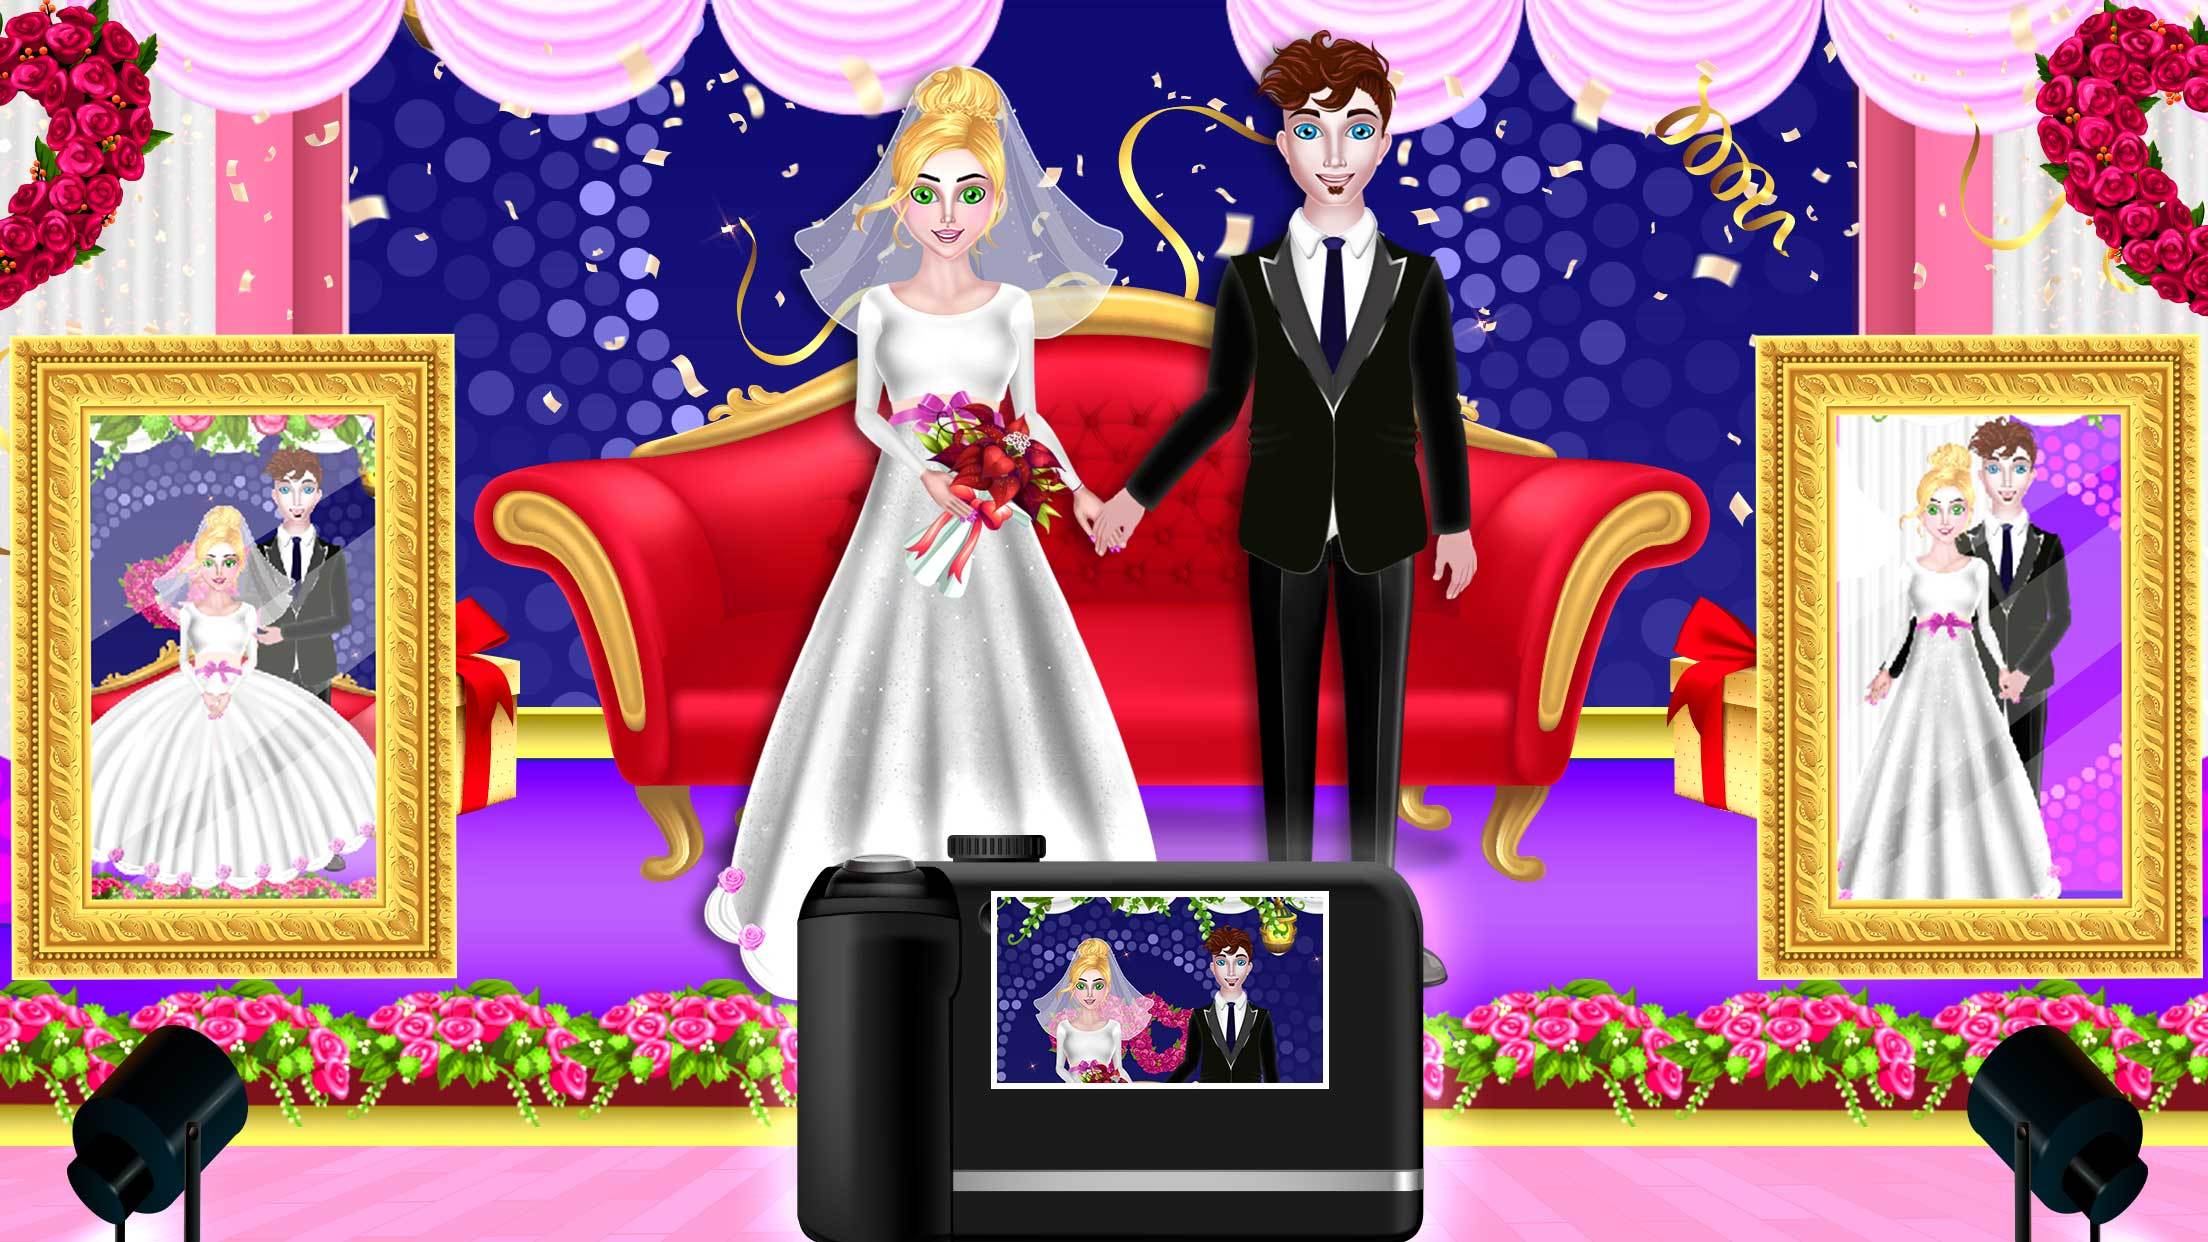 Download do APK de Jogos de princesa casamento para Android